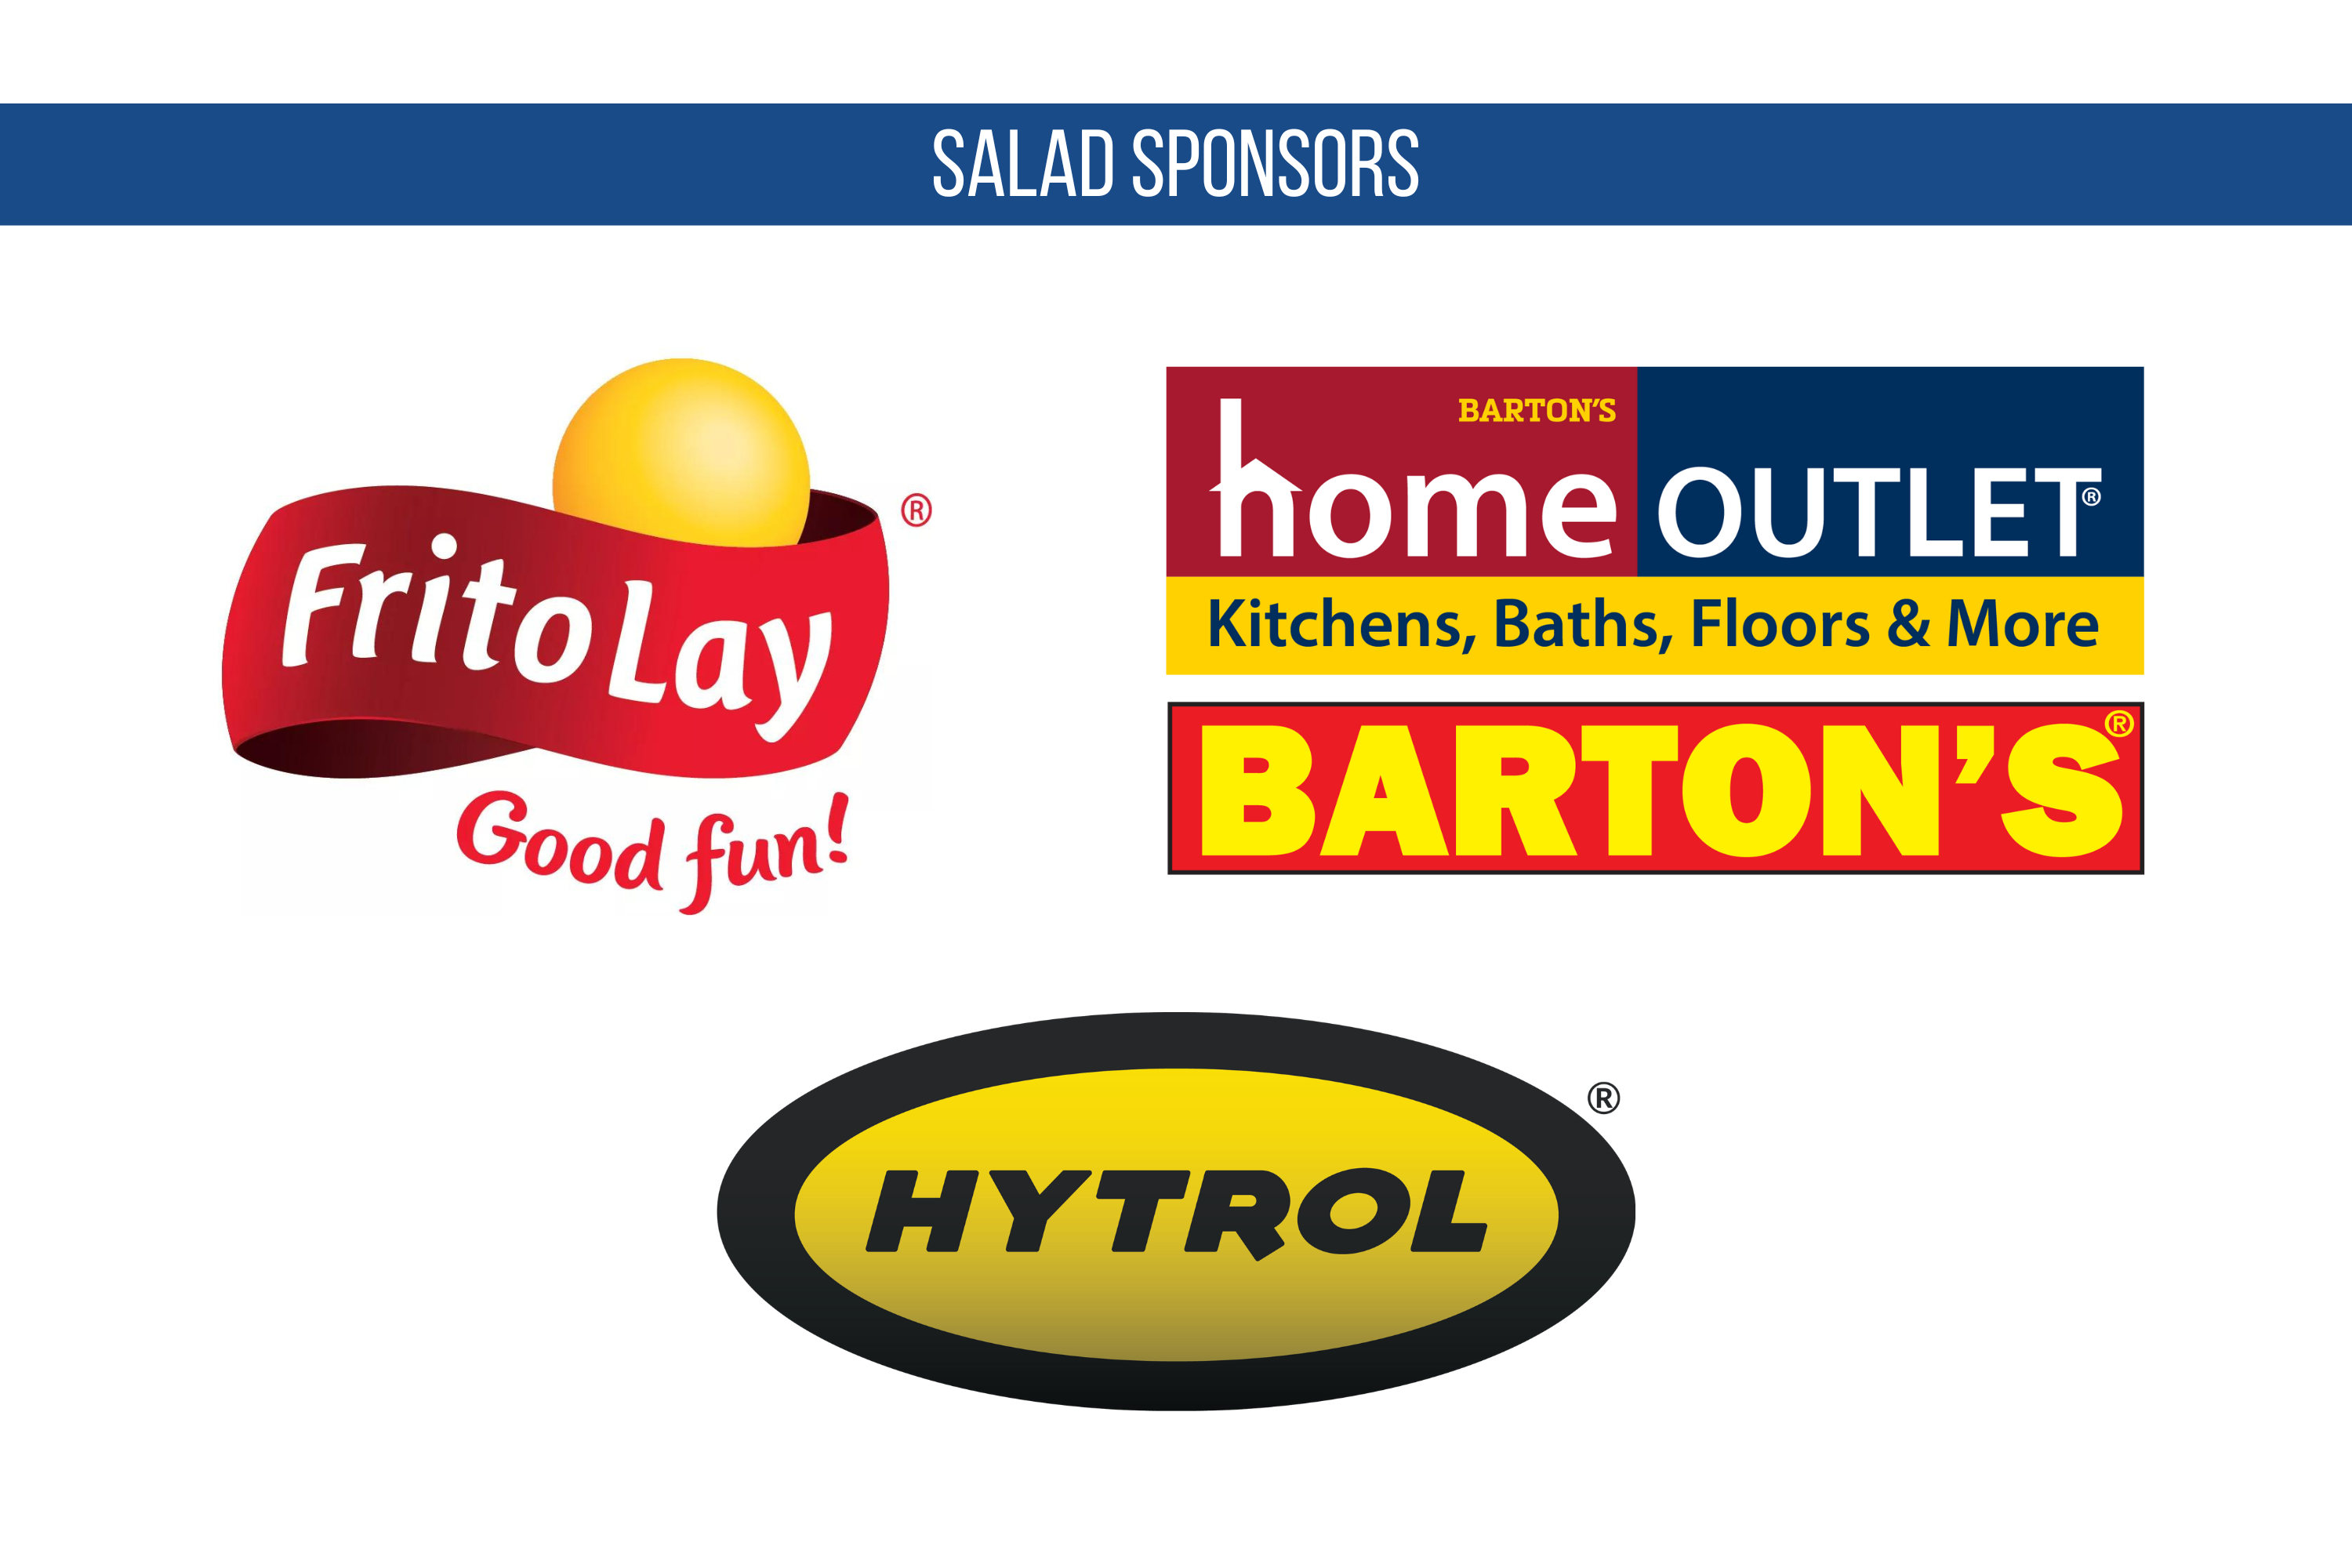 Salad Sponsors: Frito Lay, Barton's Home Outlet, Hytrol